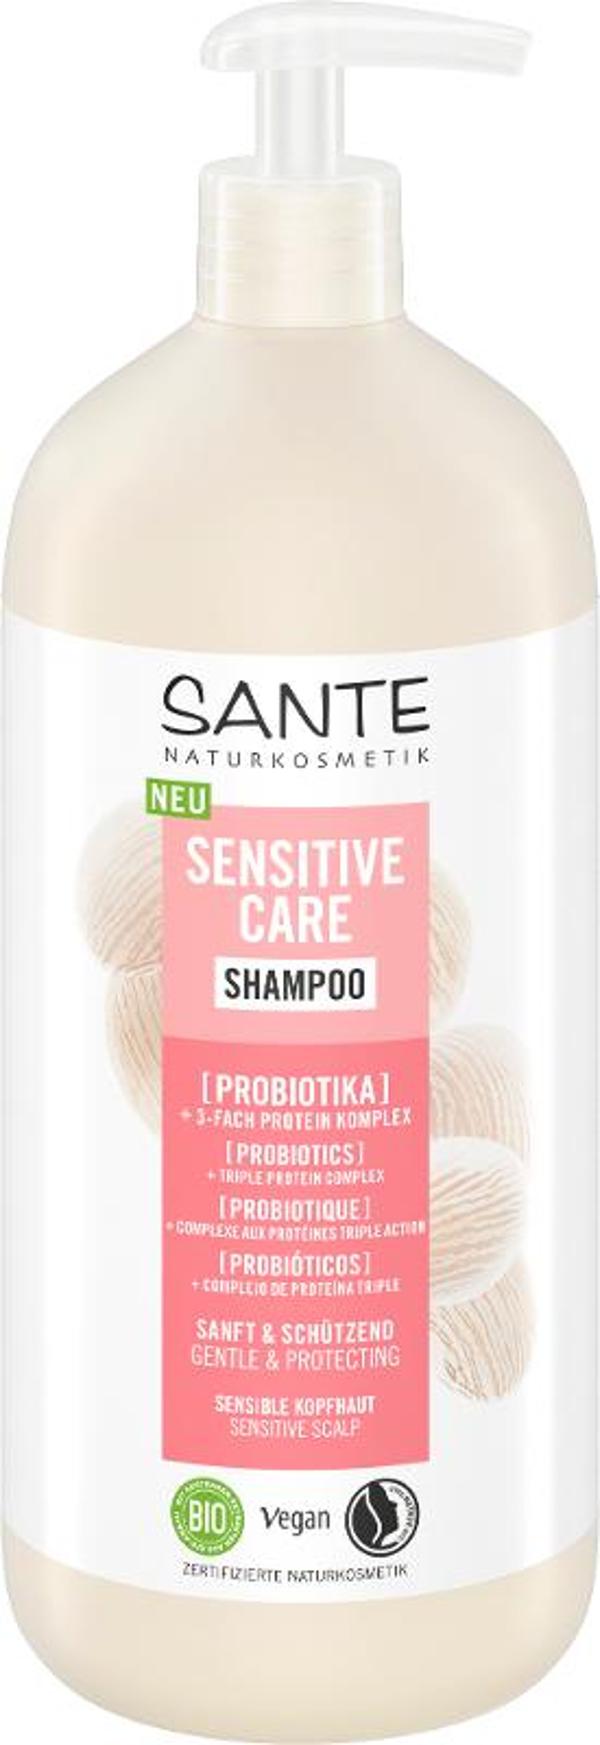 Produktfoto zu Sensitiv Care Shampoo Probiotika 950ml Sante